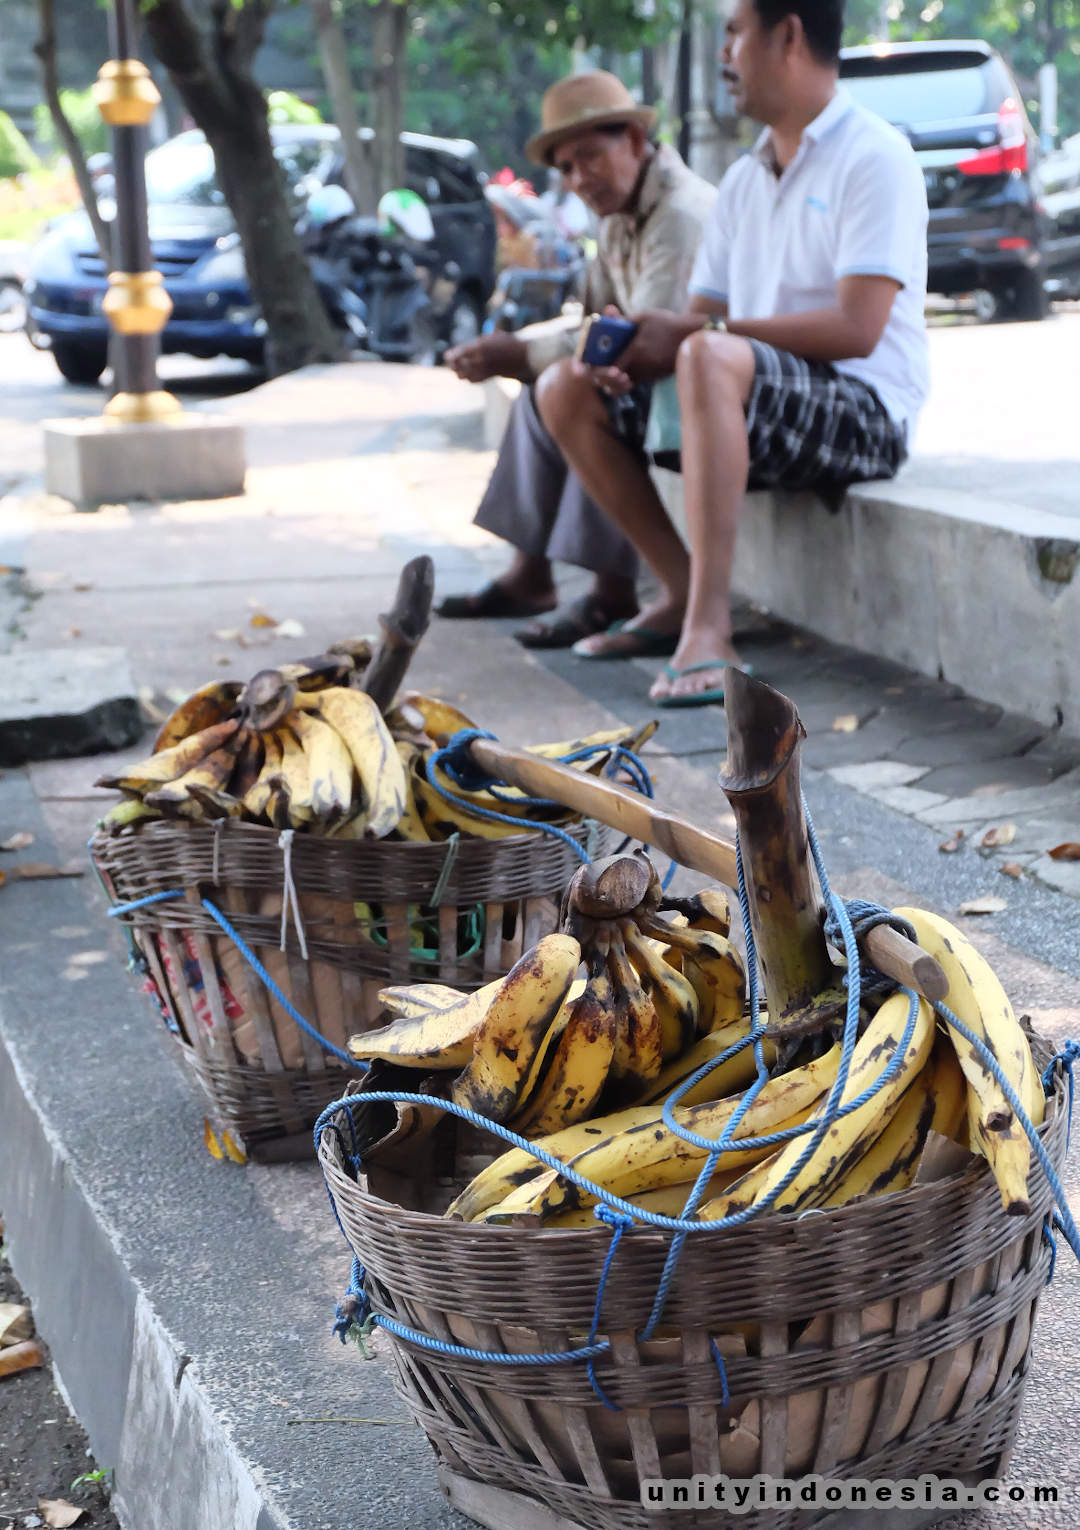 Bananas in baskets.